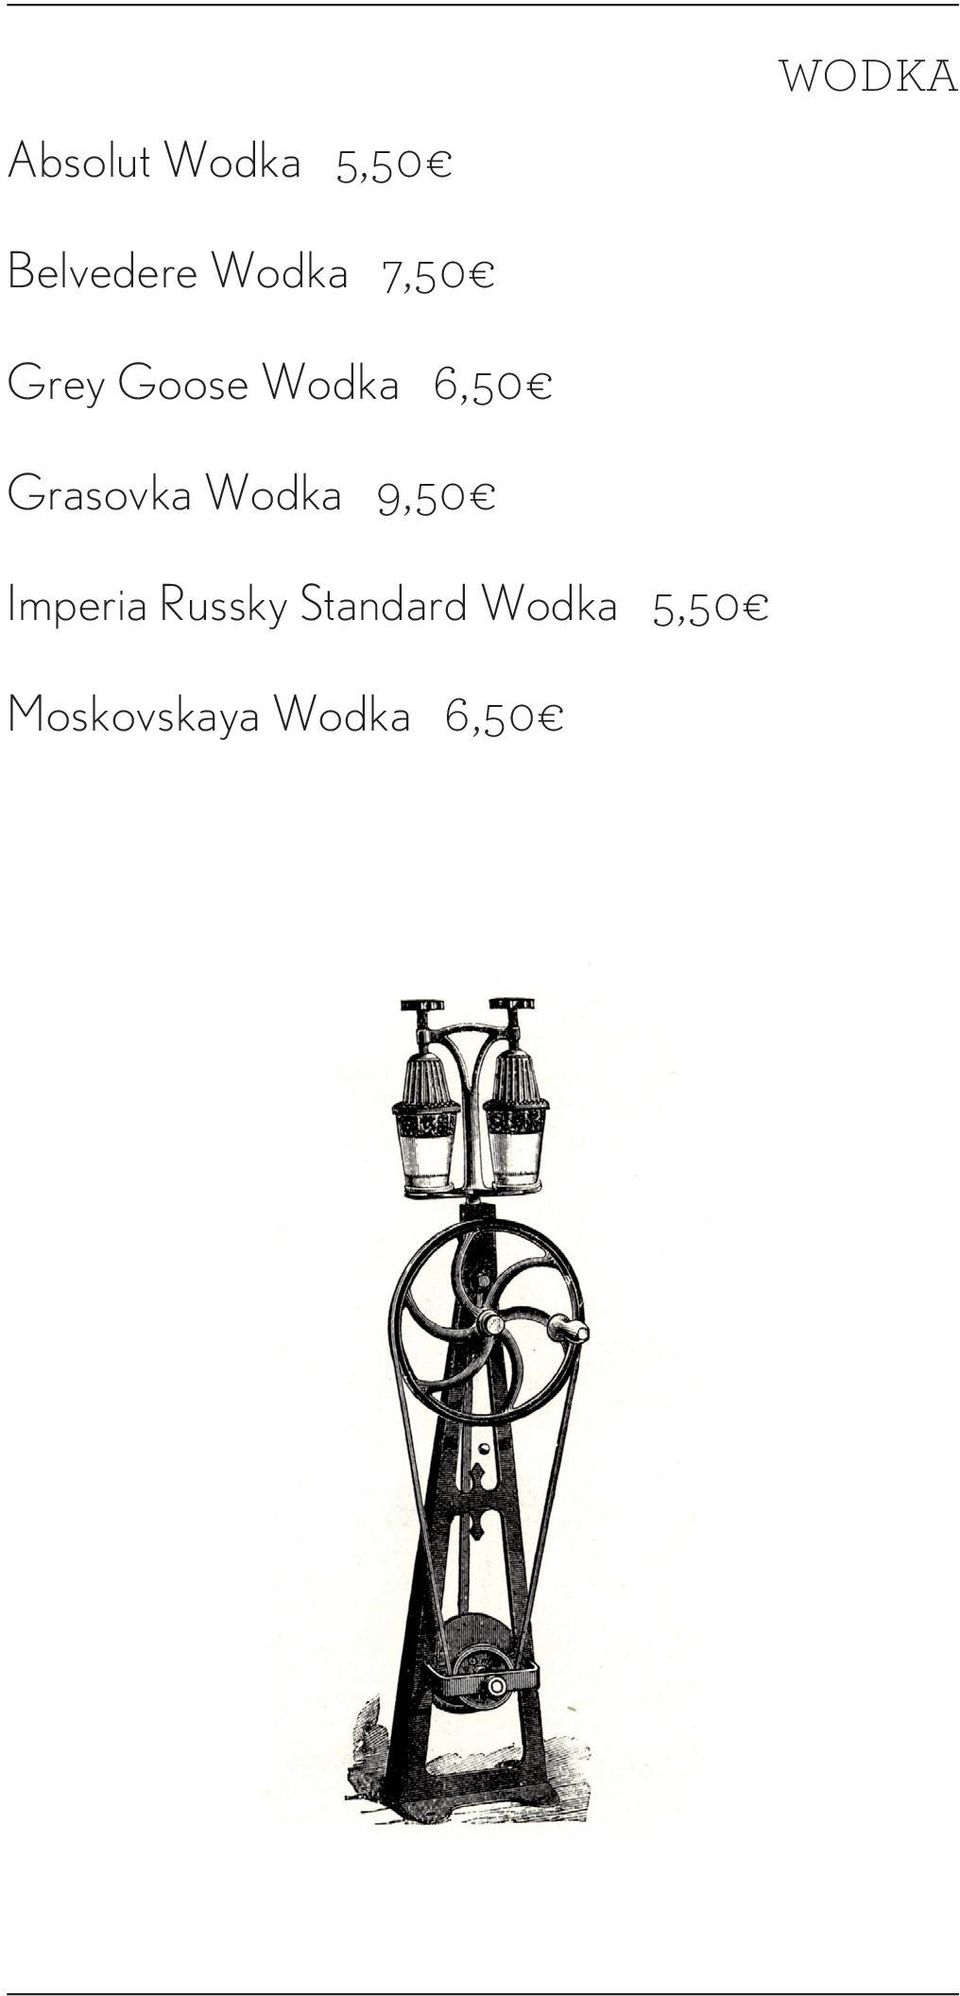 Grasovka Wodka 9,50 Imperia Russky